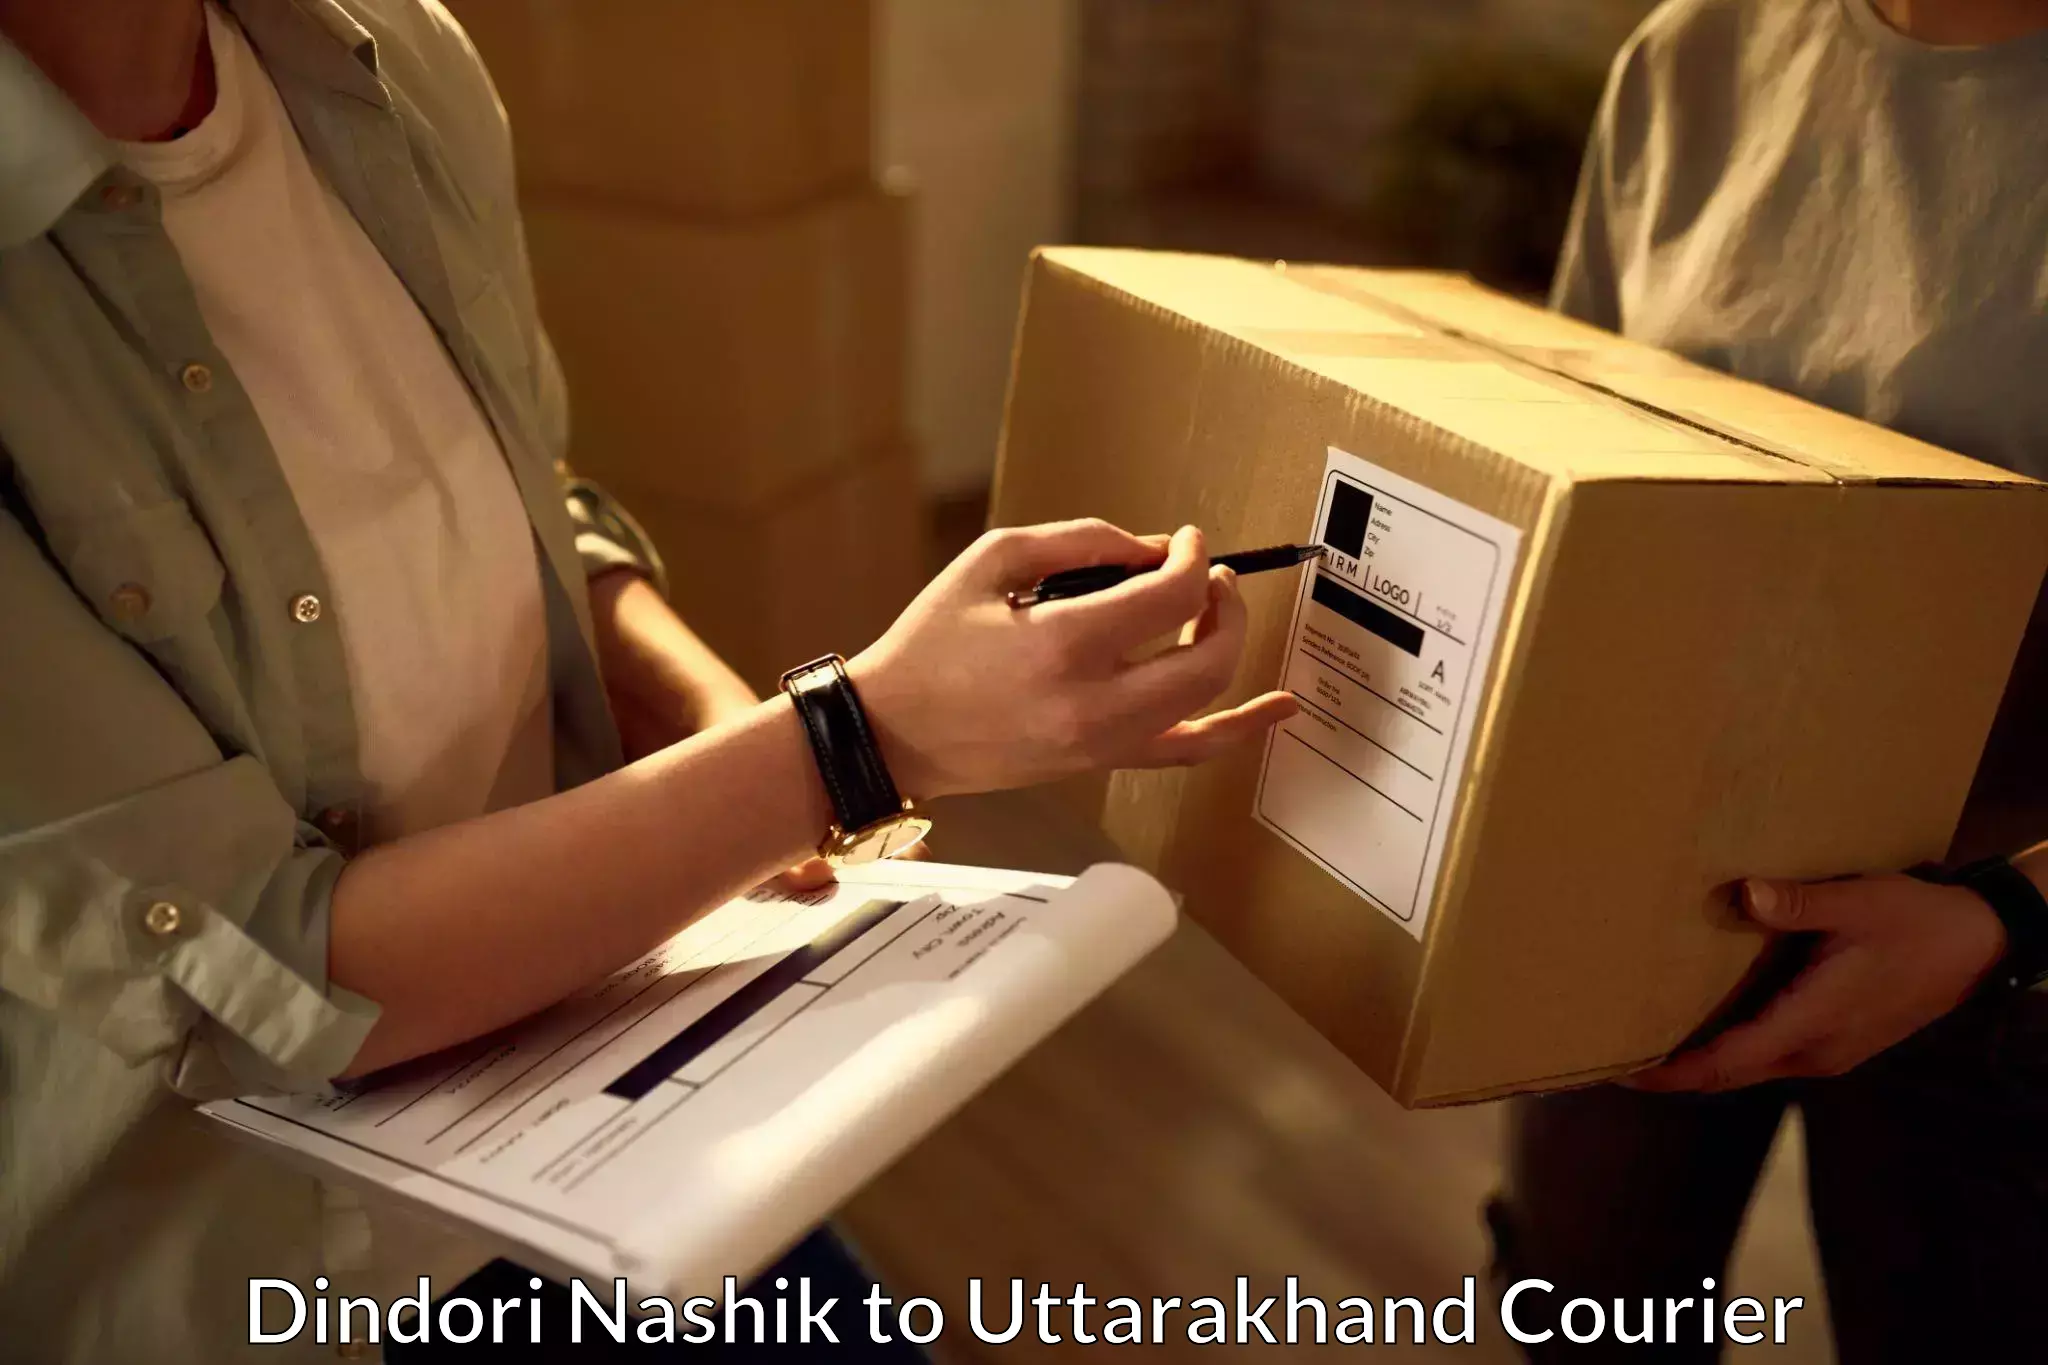 Express delivery capabilities Dindori Nashik to Tehri Garhwal